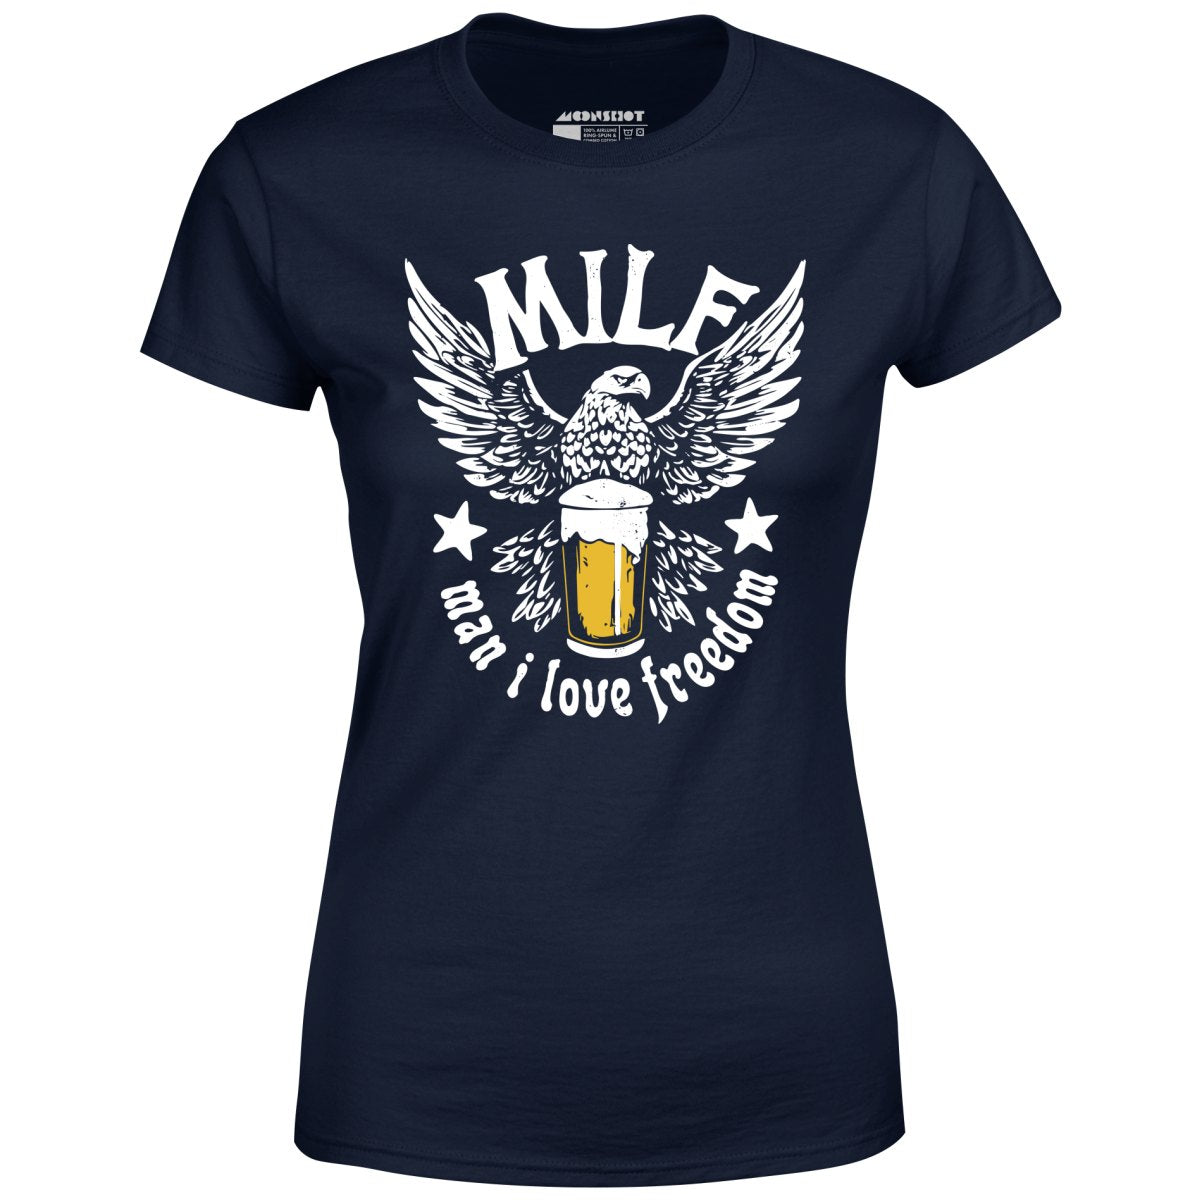 MILF Man I Love Freedom - Women's T-Shirt